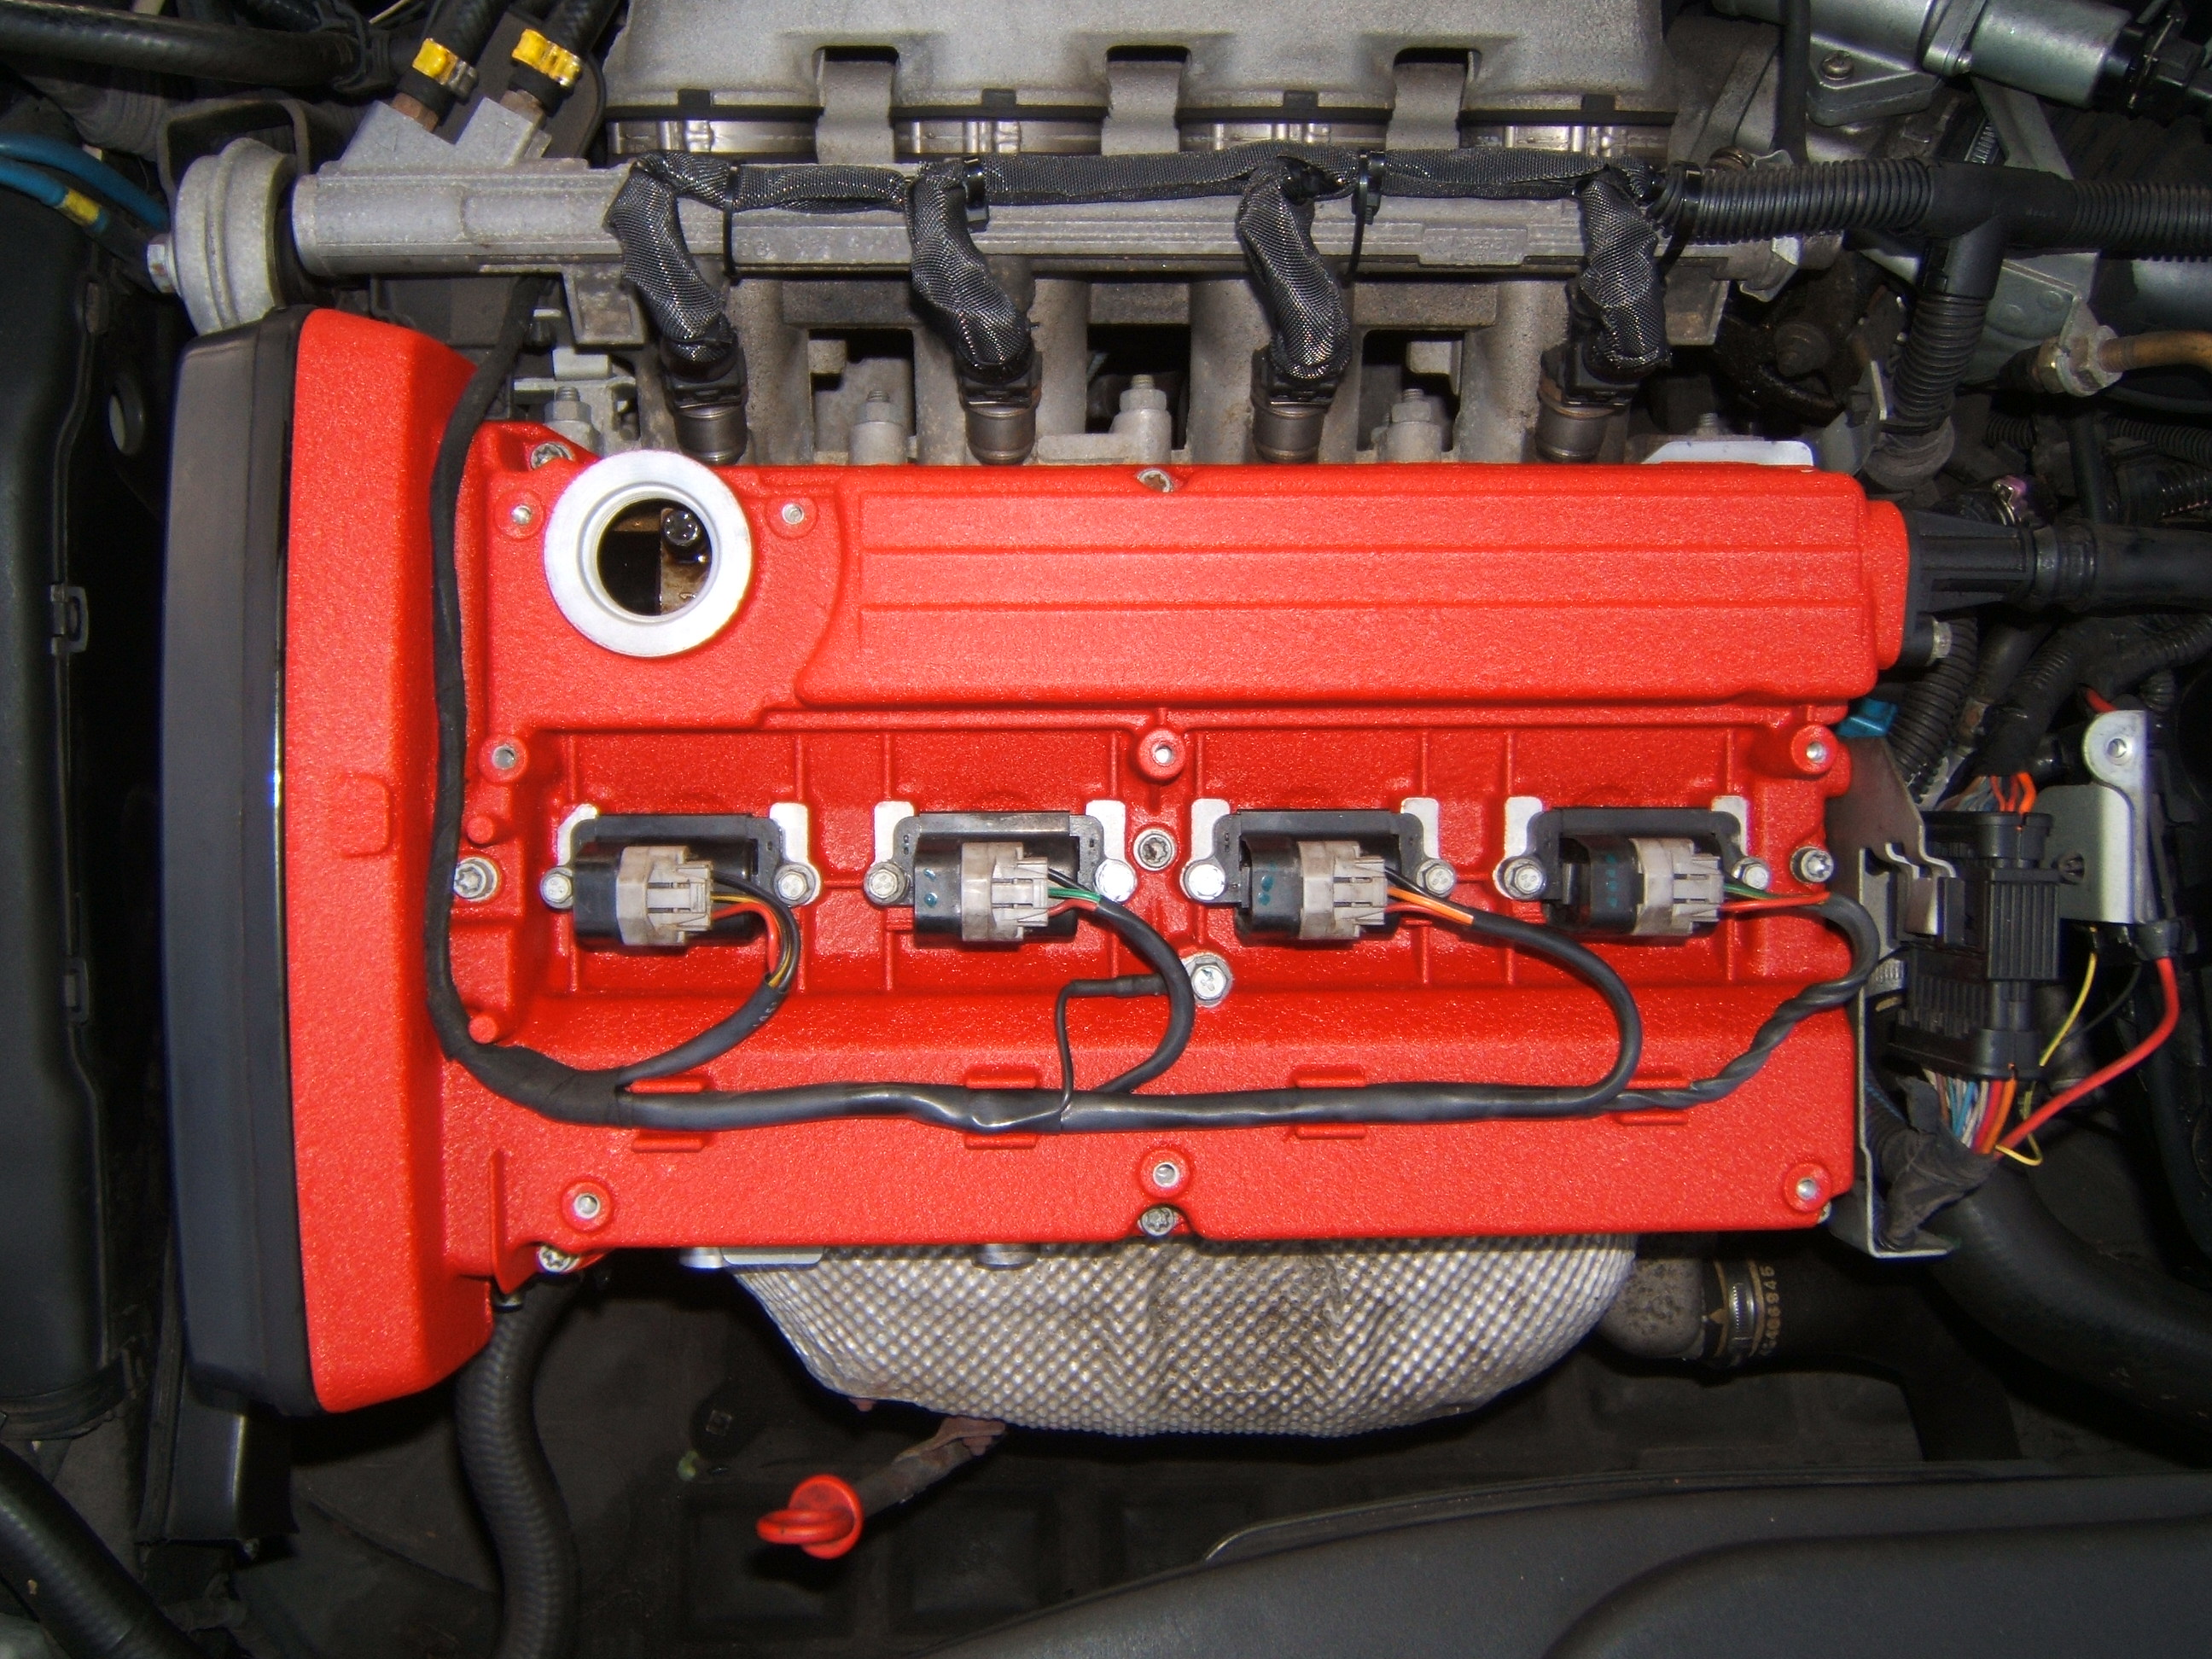 1996 Fiat Bravo 1.8 HLX Rocker Cover Powdercoated in crinkle red